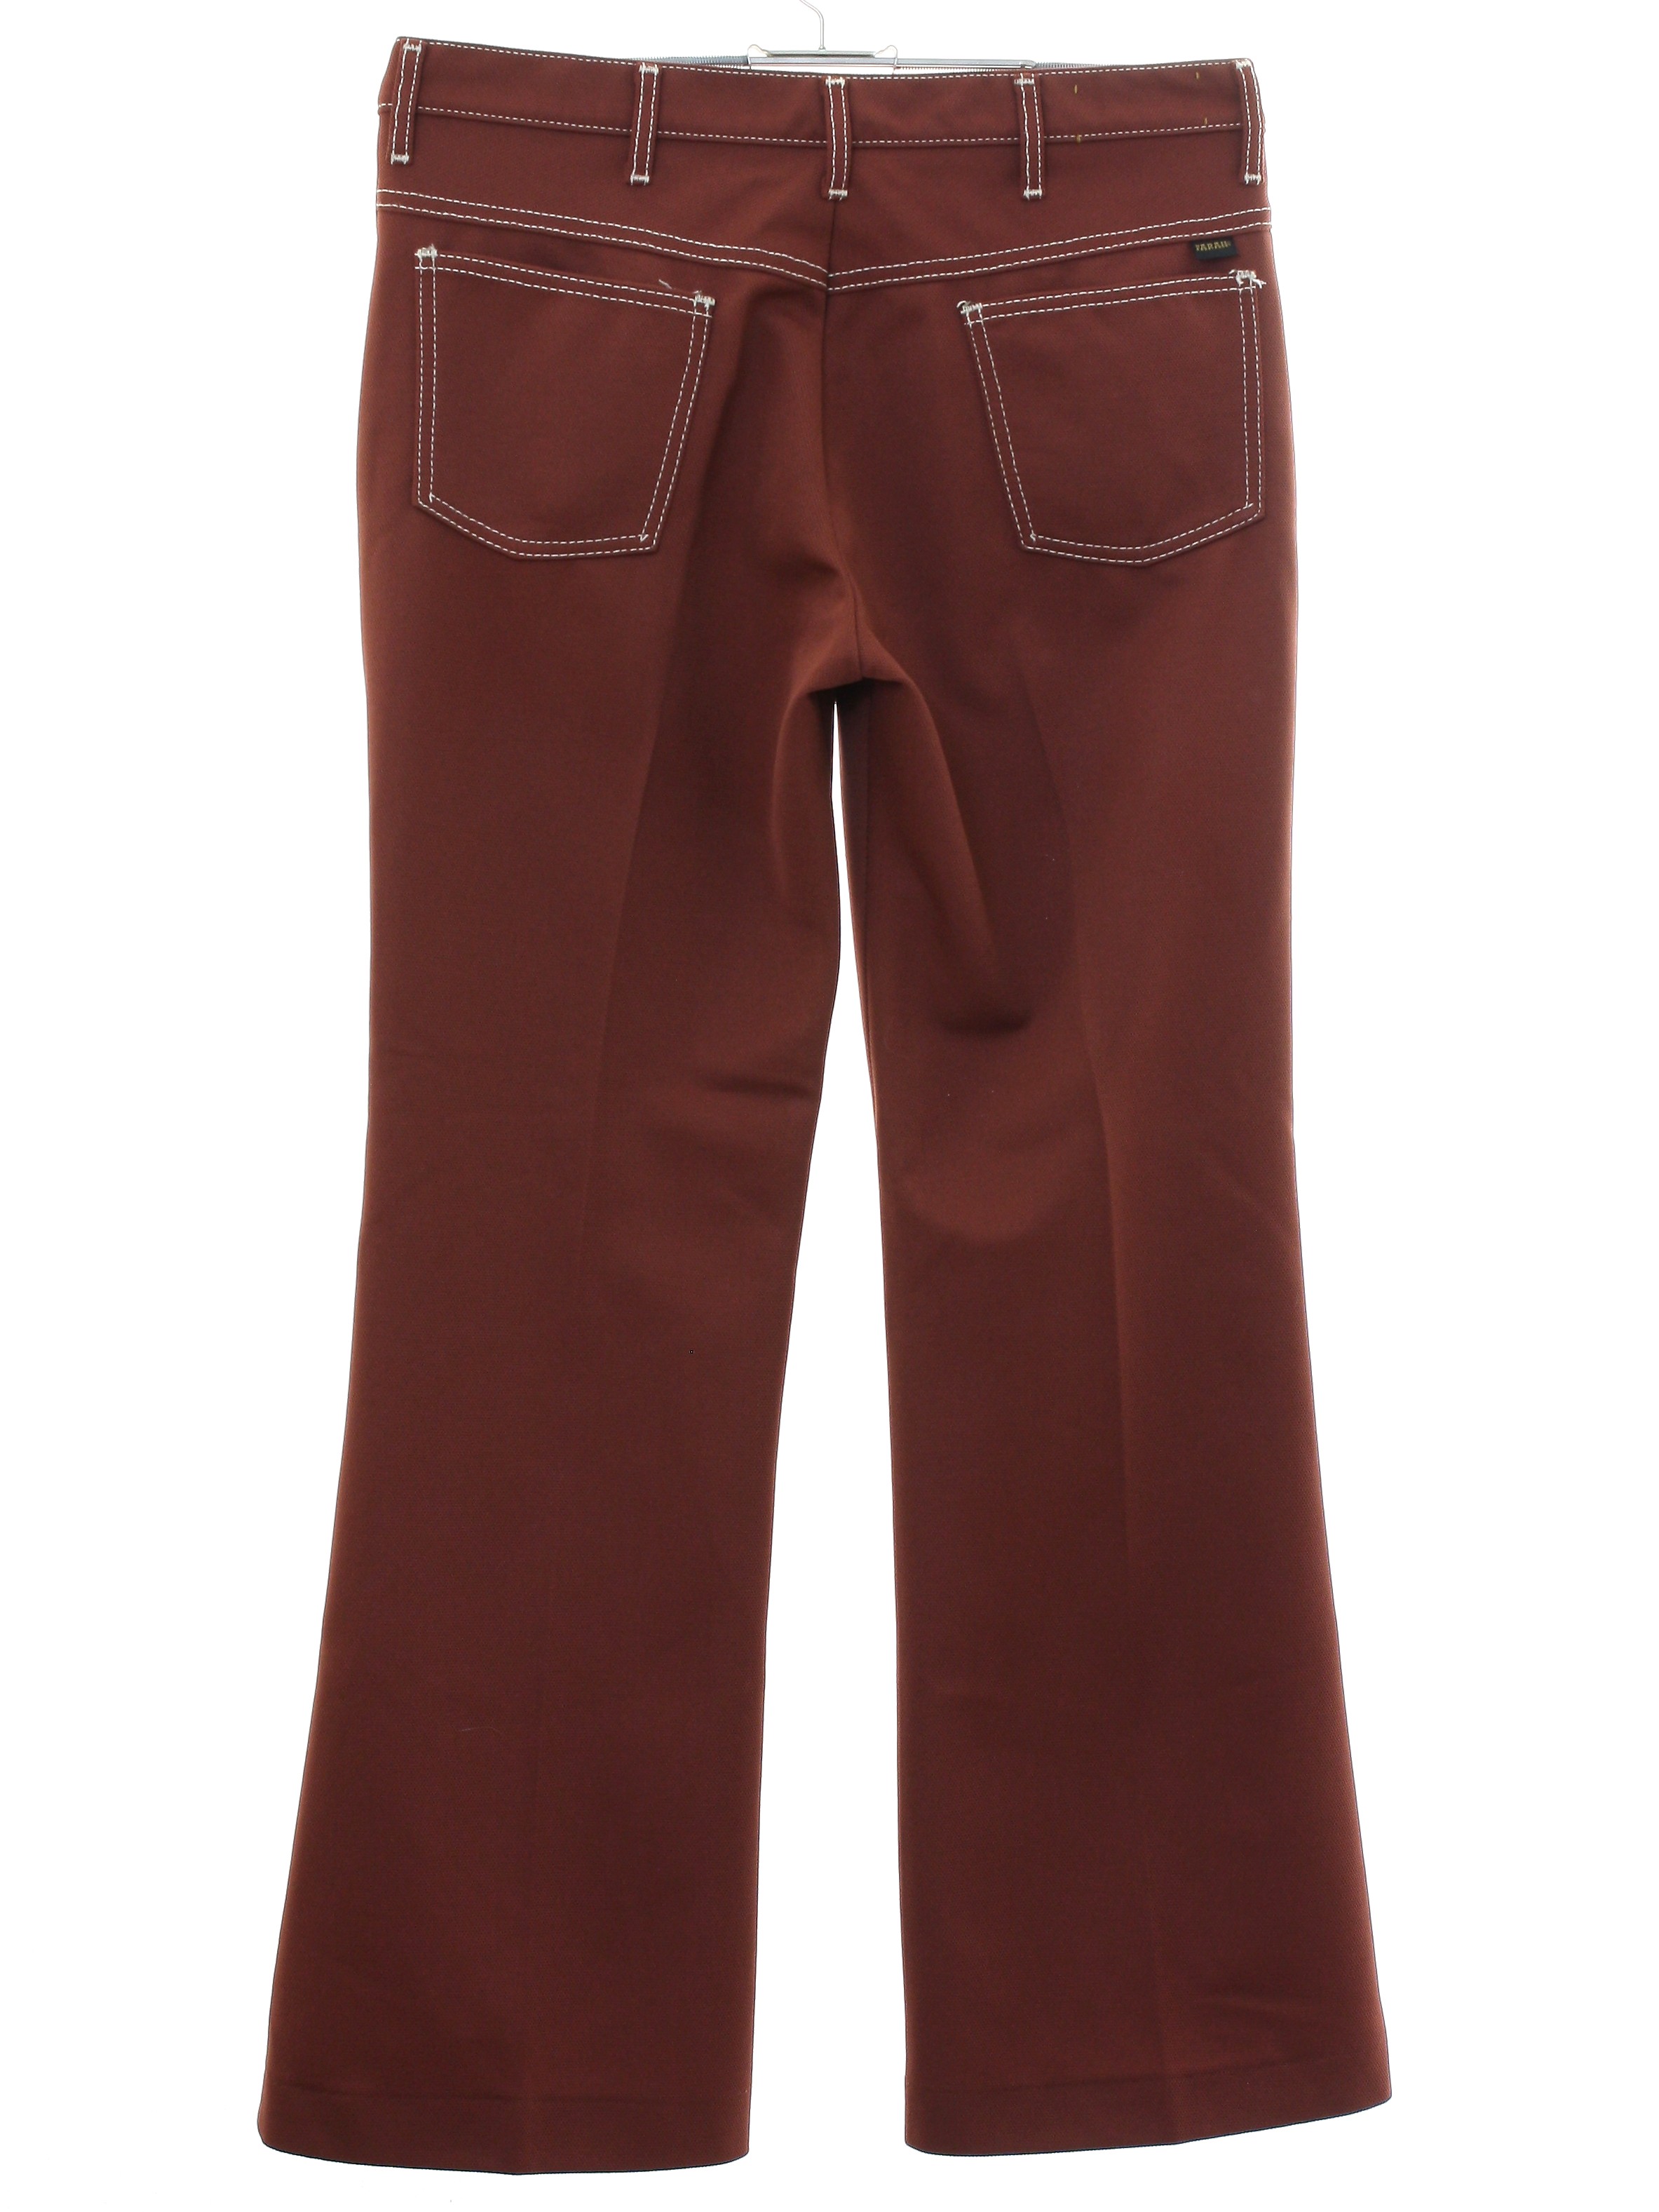 Farah 70's Vintage Flared Pants / Flares: 70s -Farah- Mens rusty brown ...